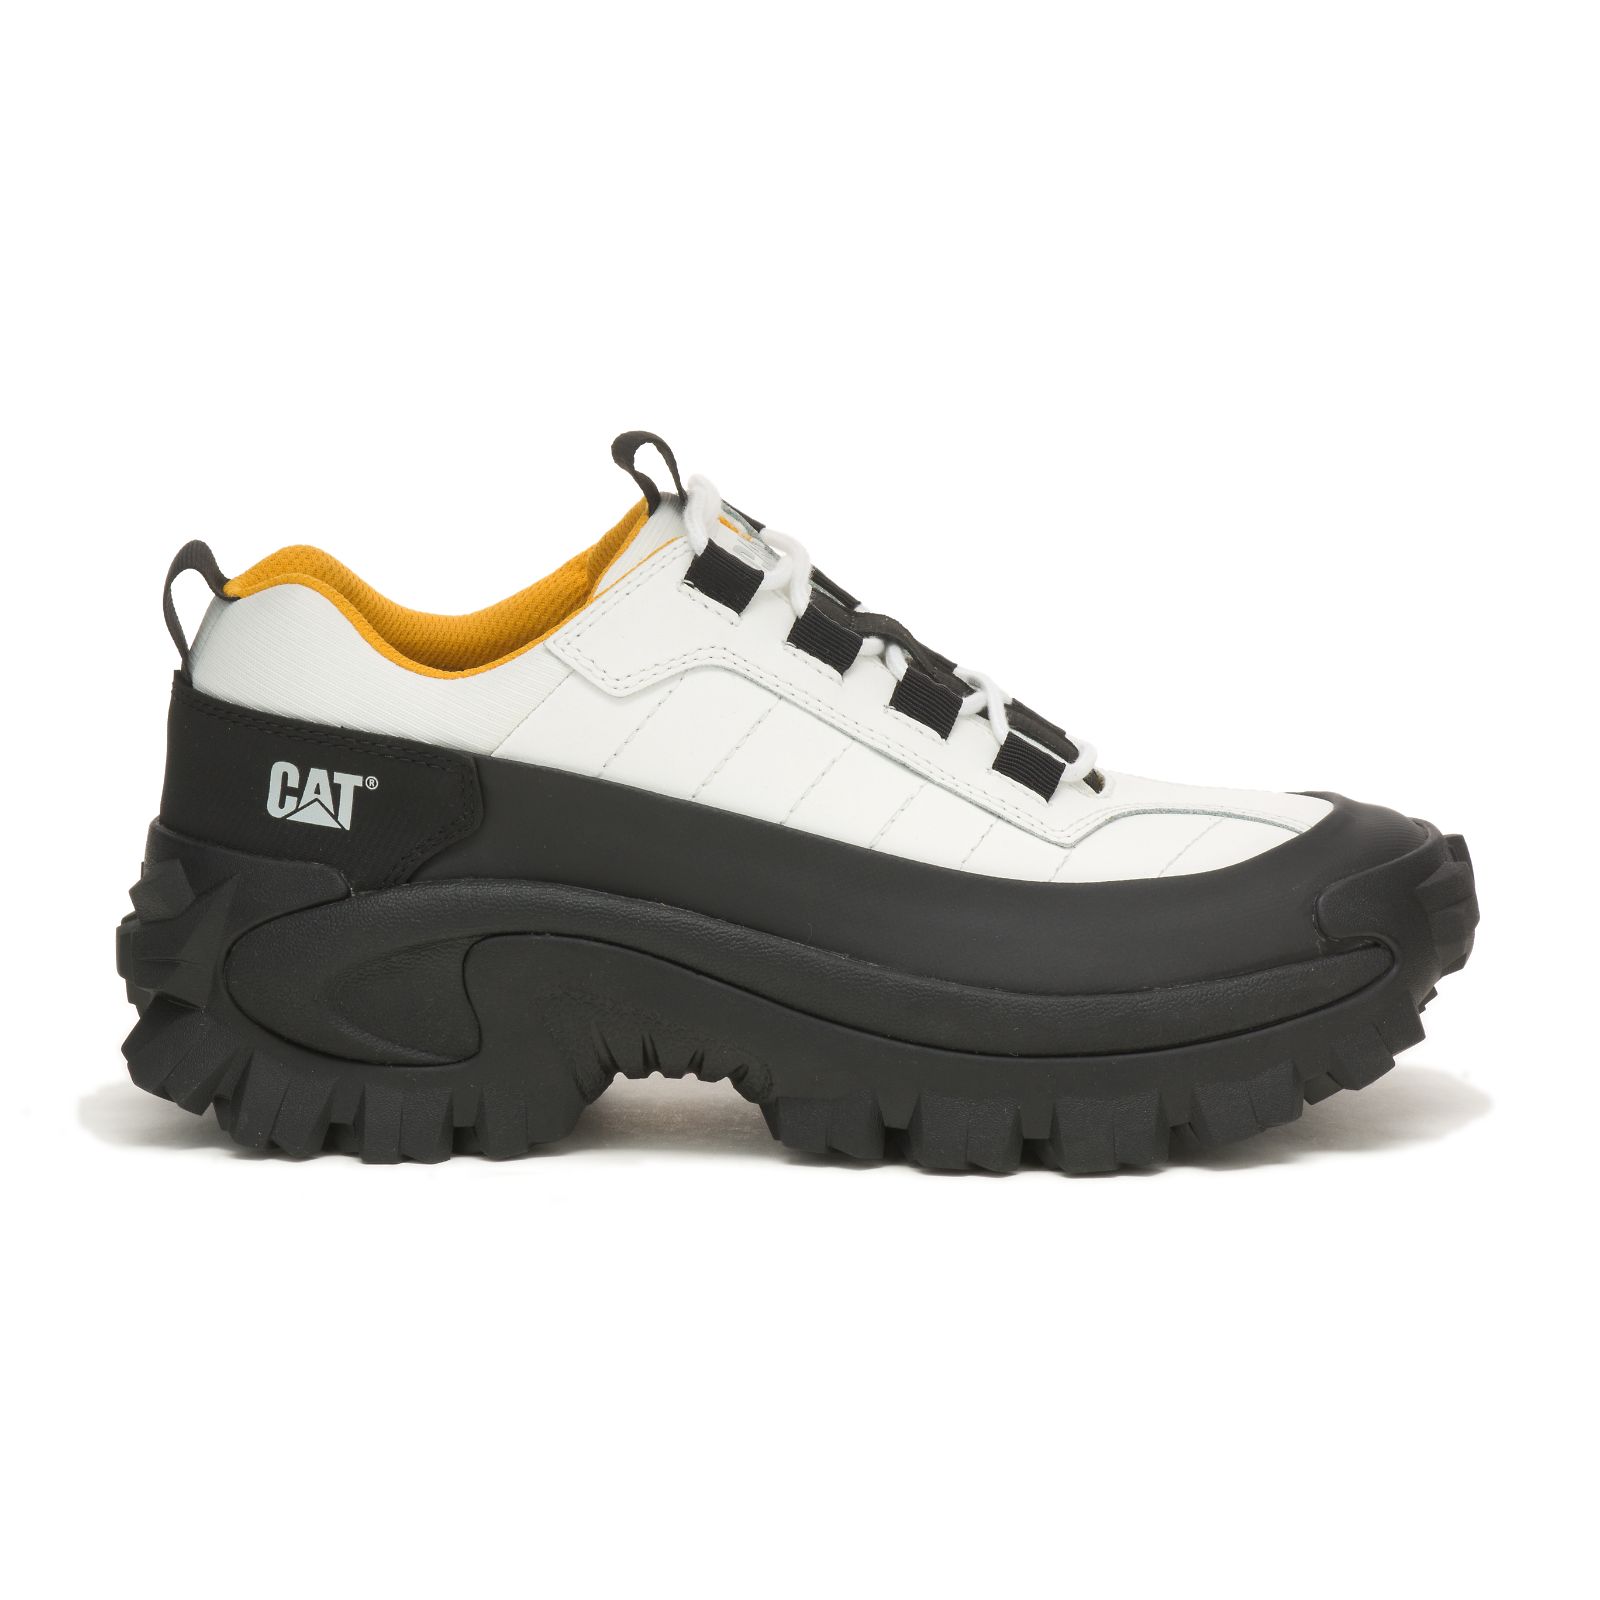 Caterpillar Sneakers Dubai - Caterpillar Intruder Waterproof Galosh Mens - White HFBMTP081